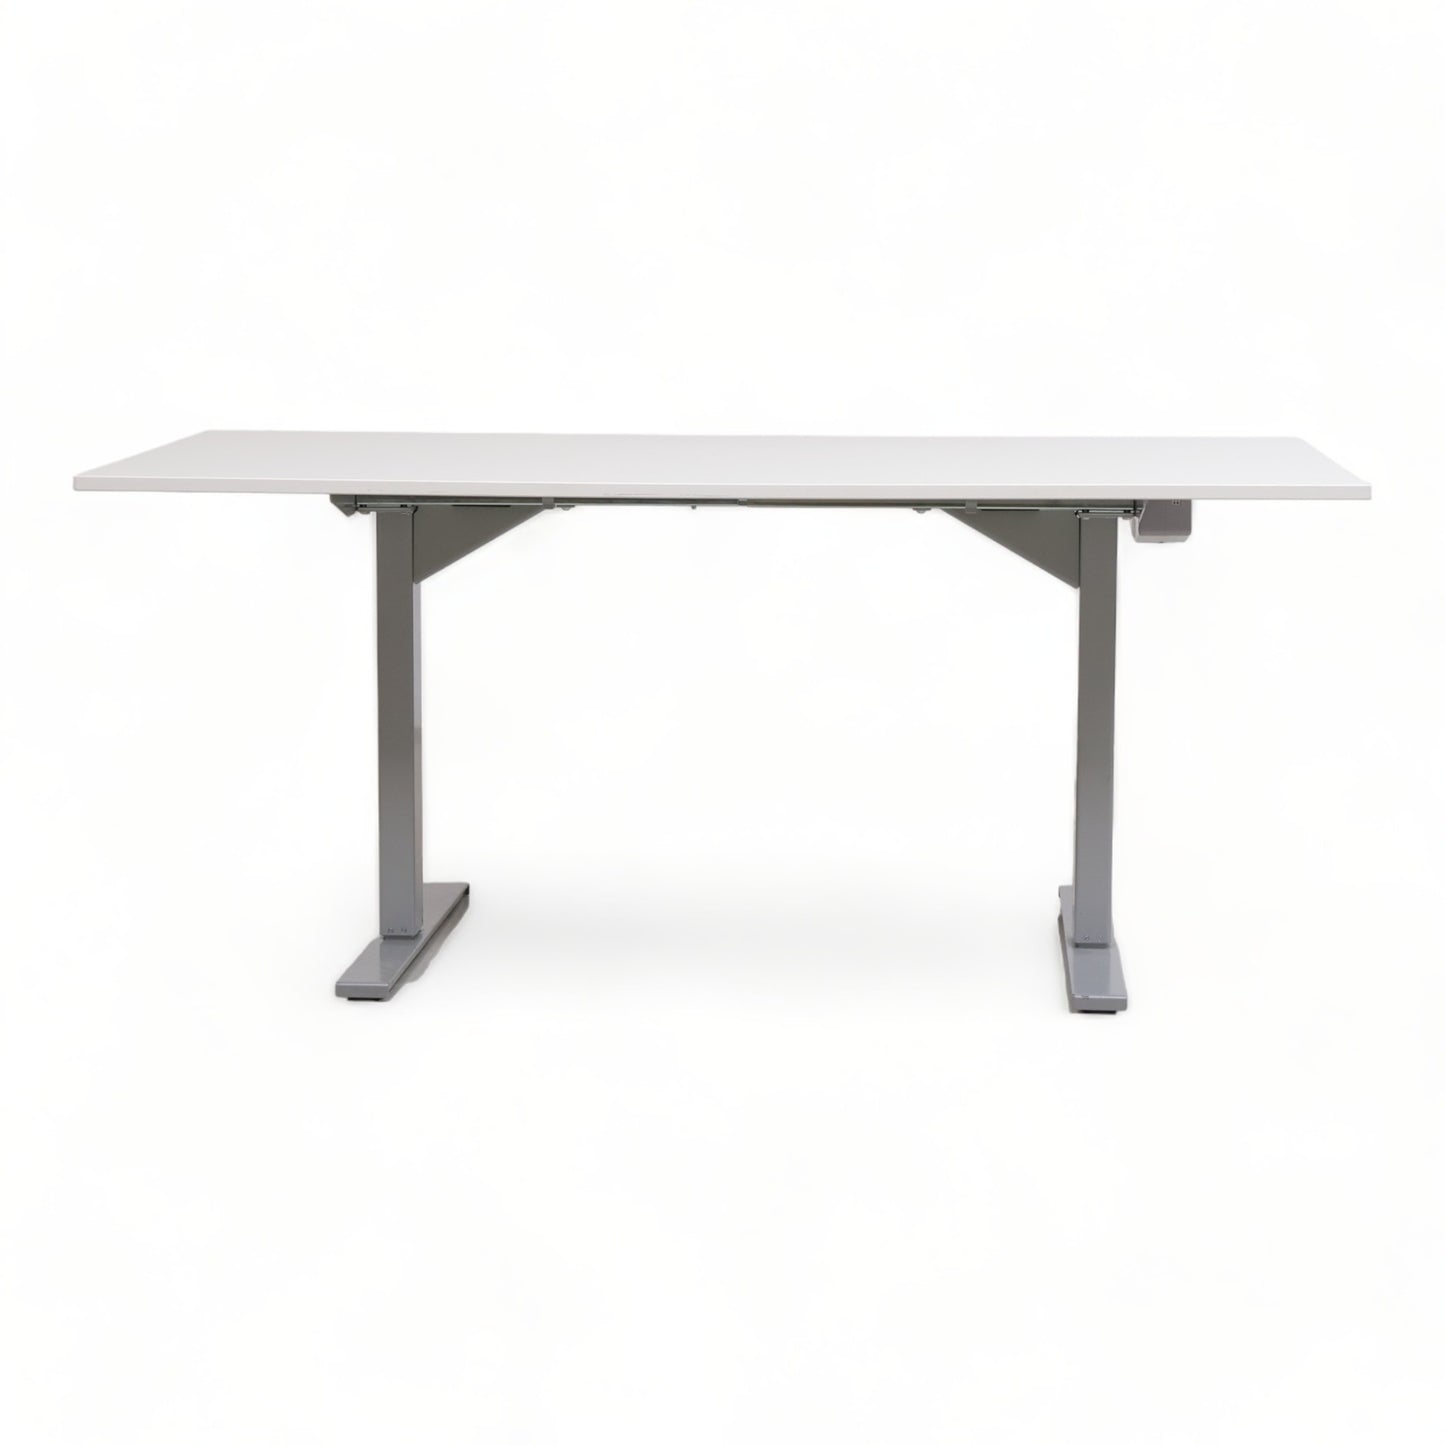 Kvalitetssikret | 160x80cm Elektrisk hev/senk skrivebord i hvit farge